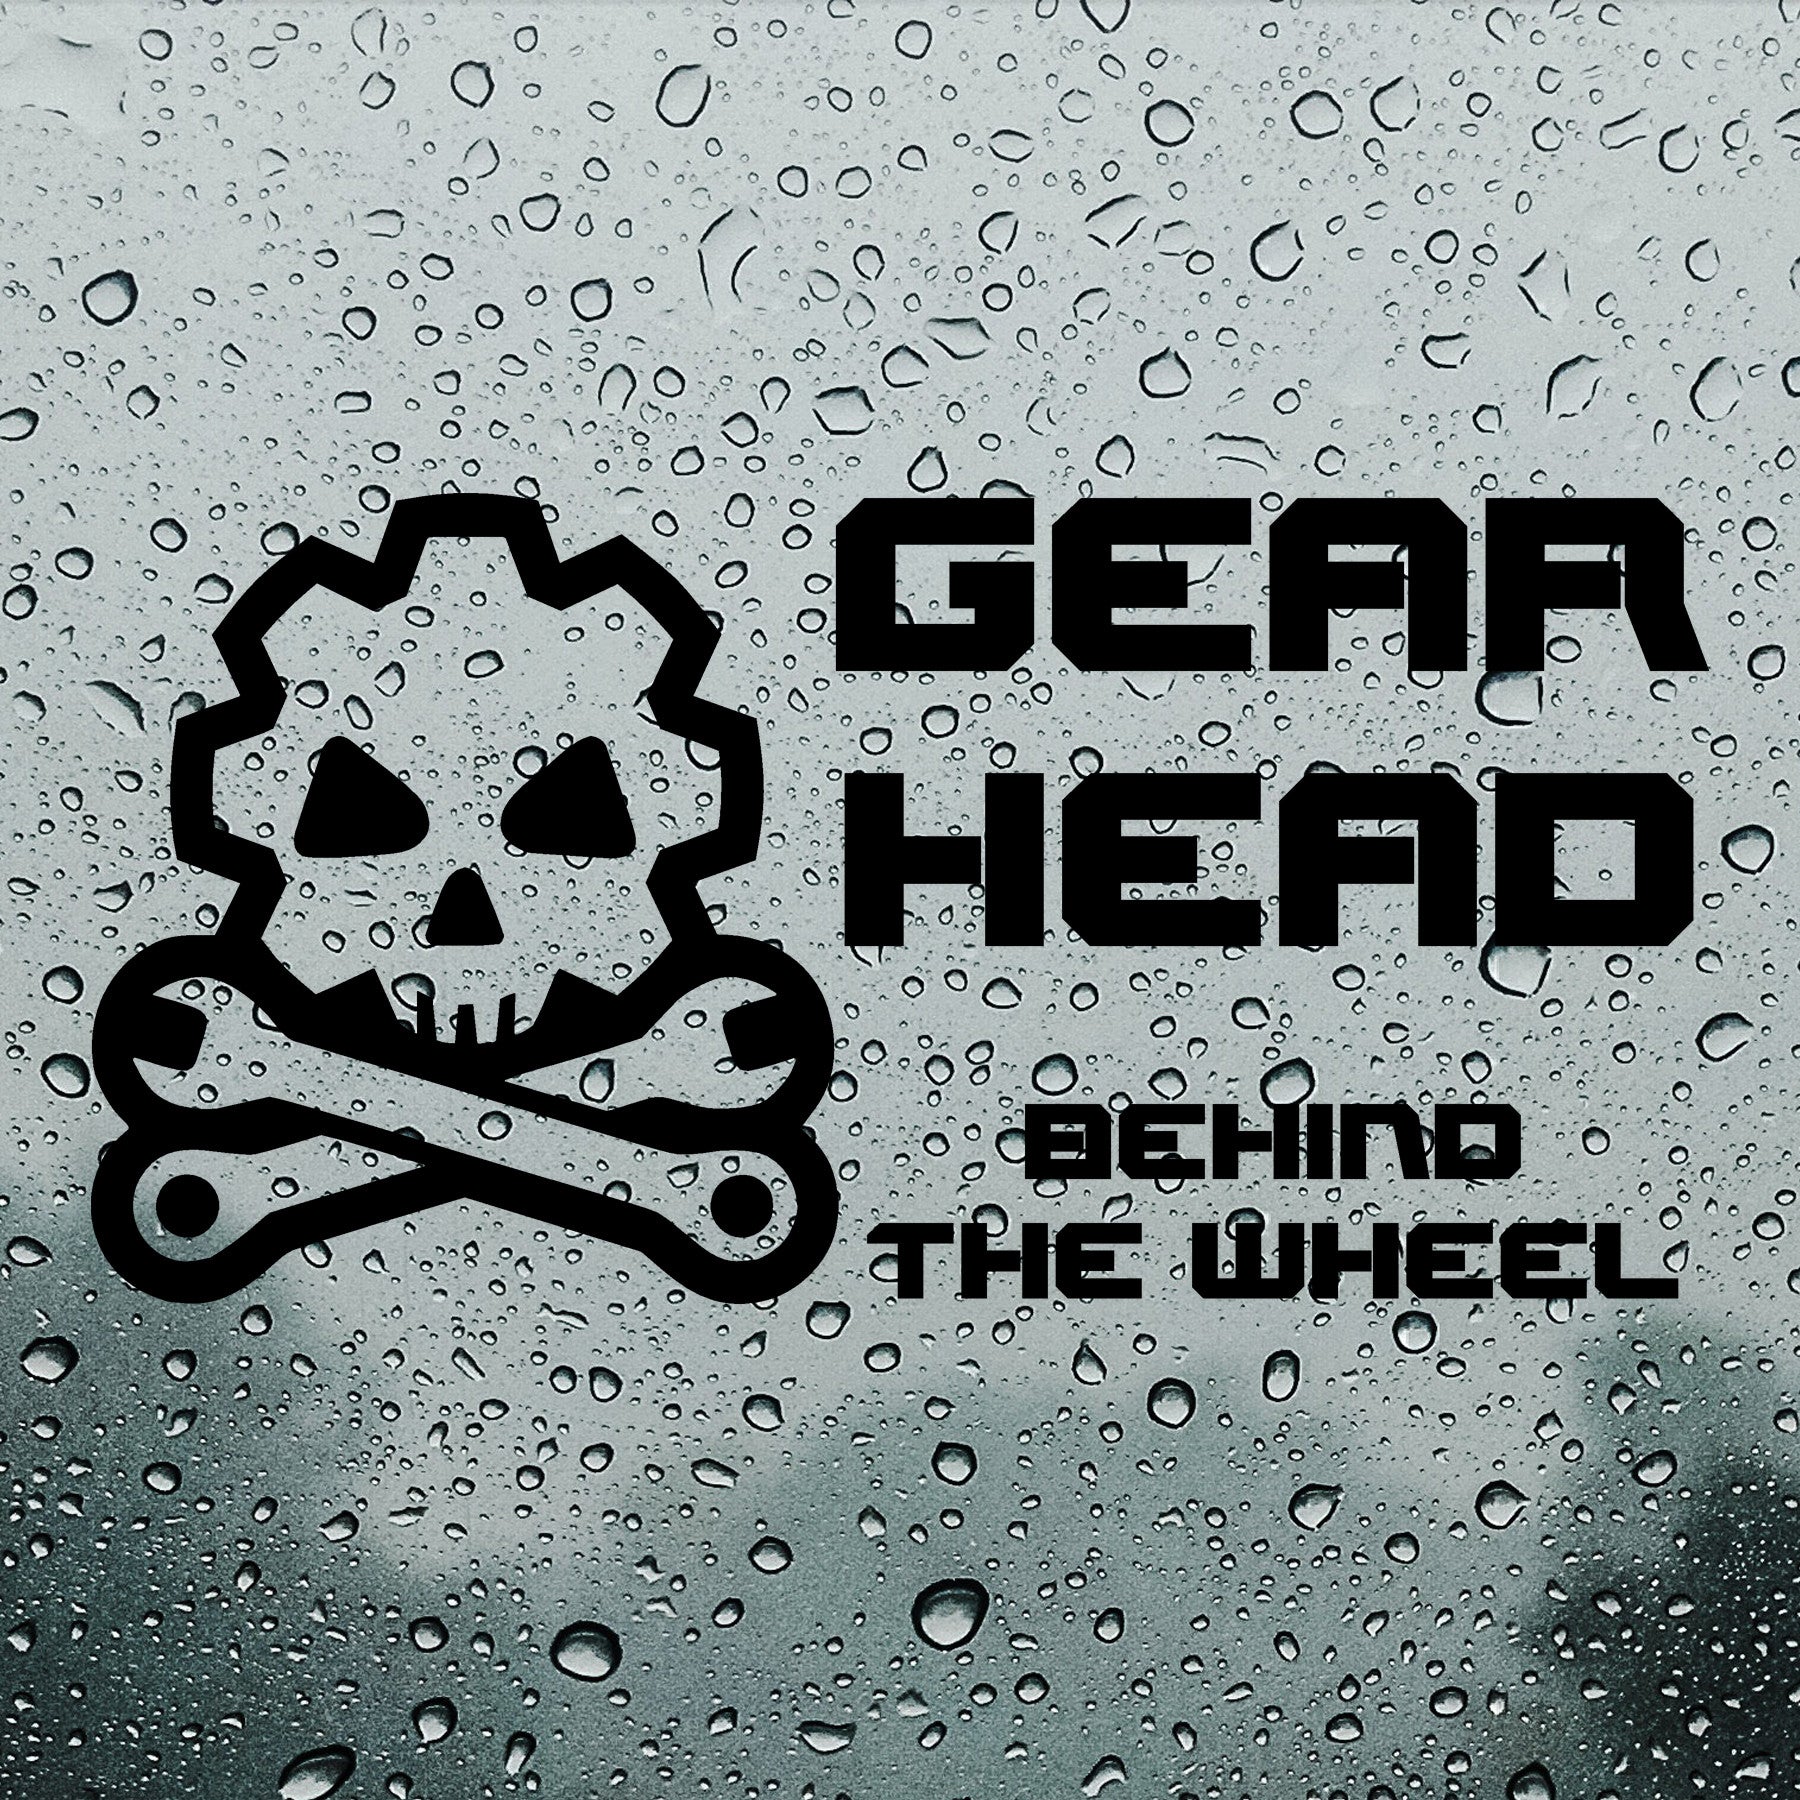 Gearhead behind the wheel | Bumper sticker - Adnil Creations